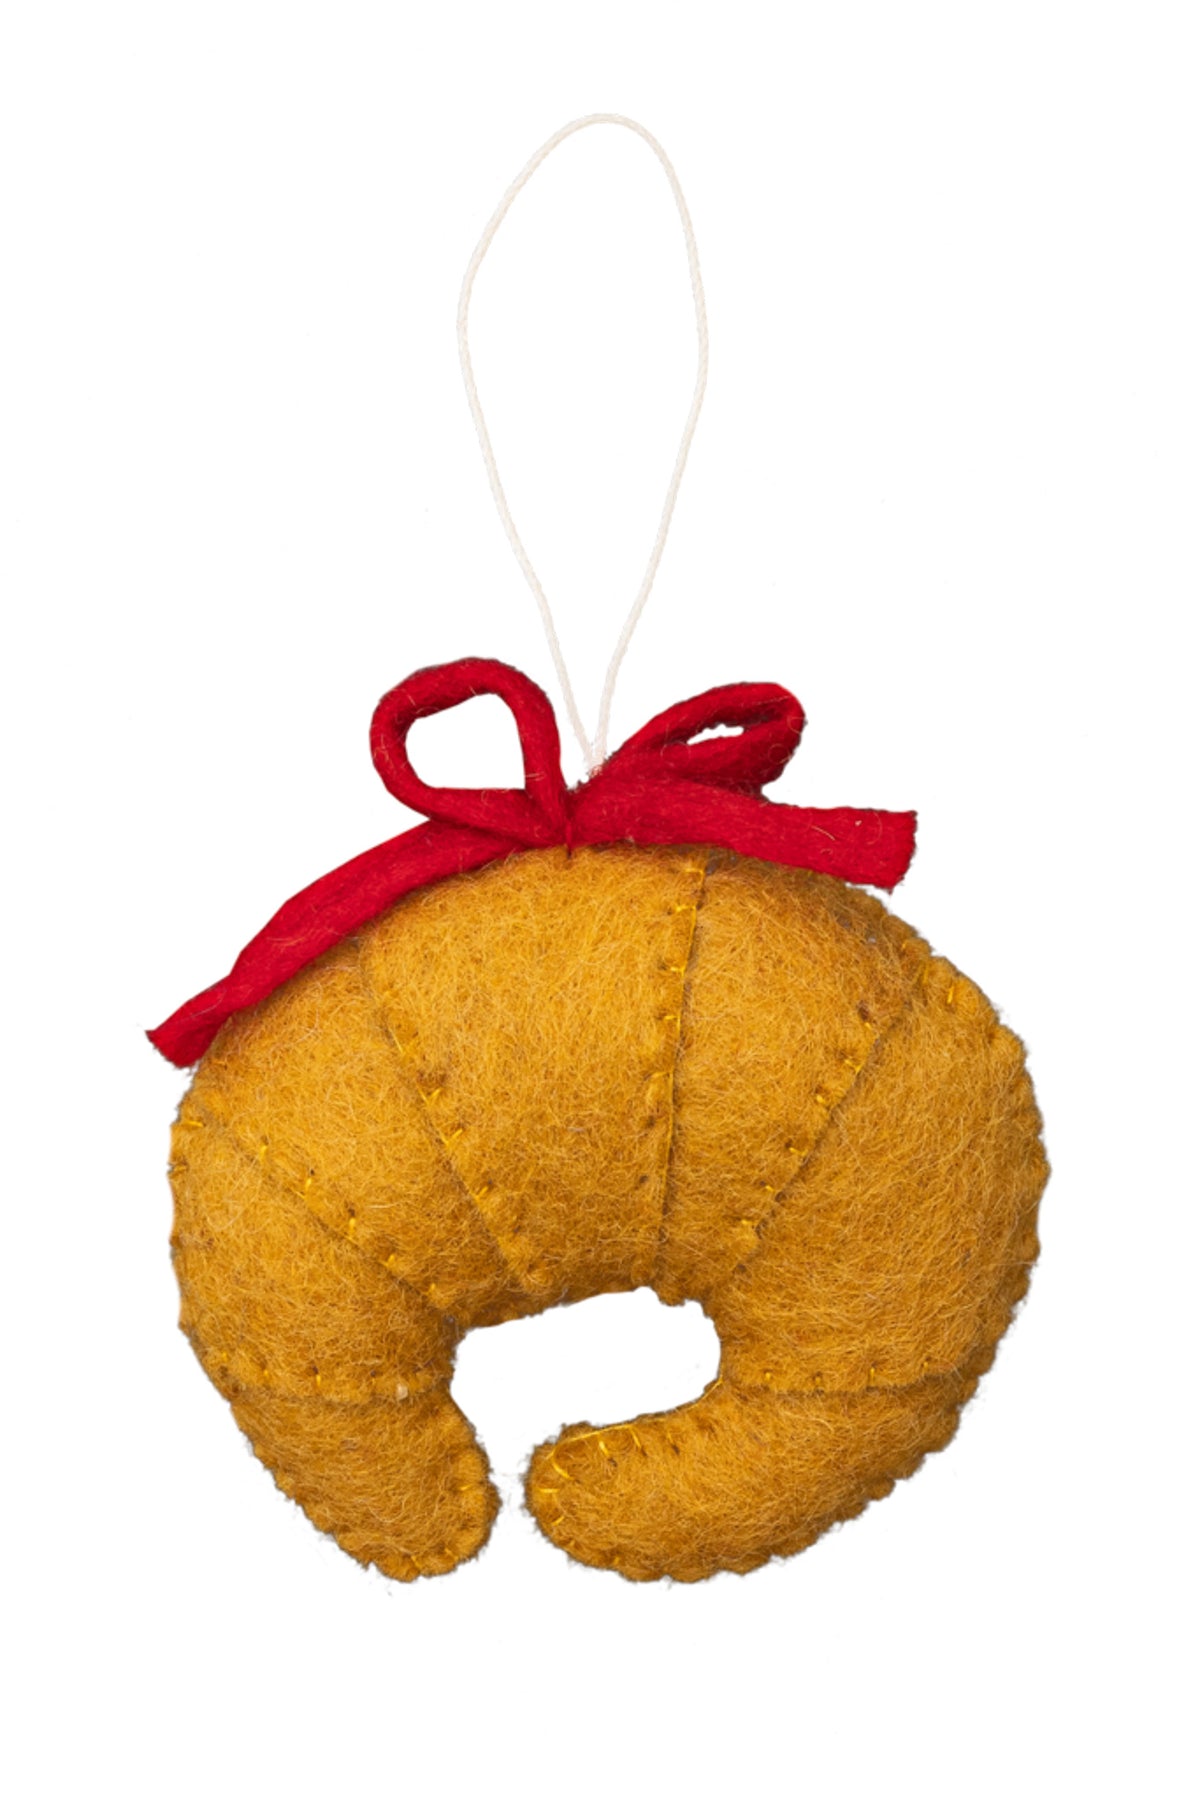 Global Goods Partners Felt Croissant Ornament